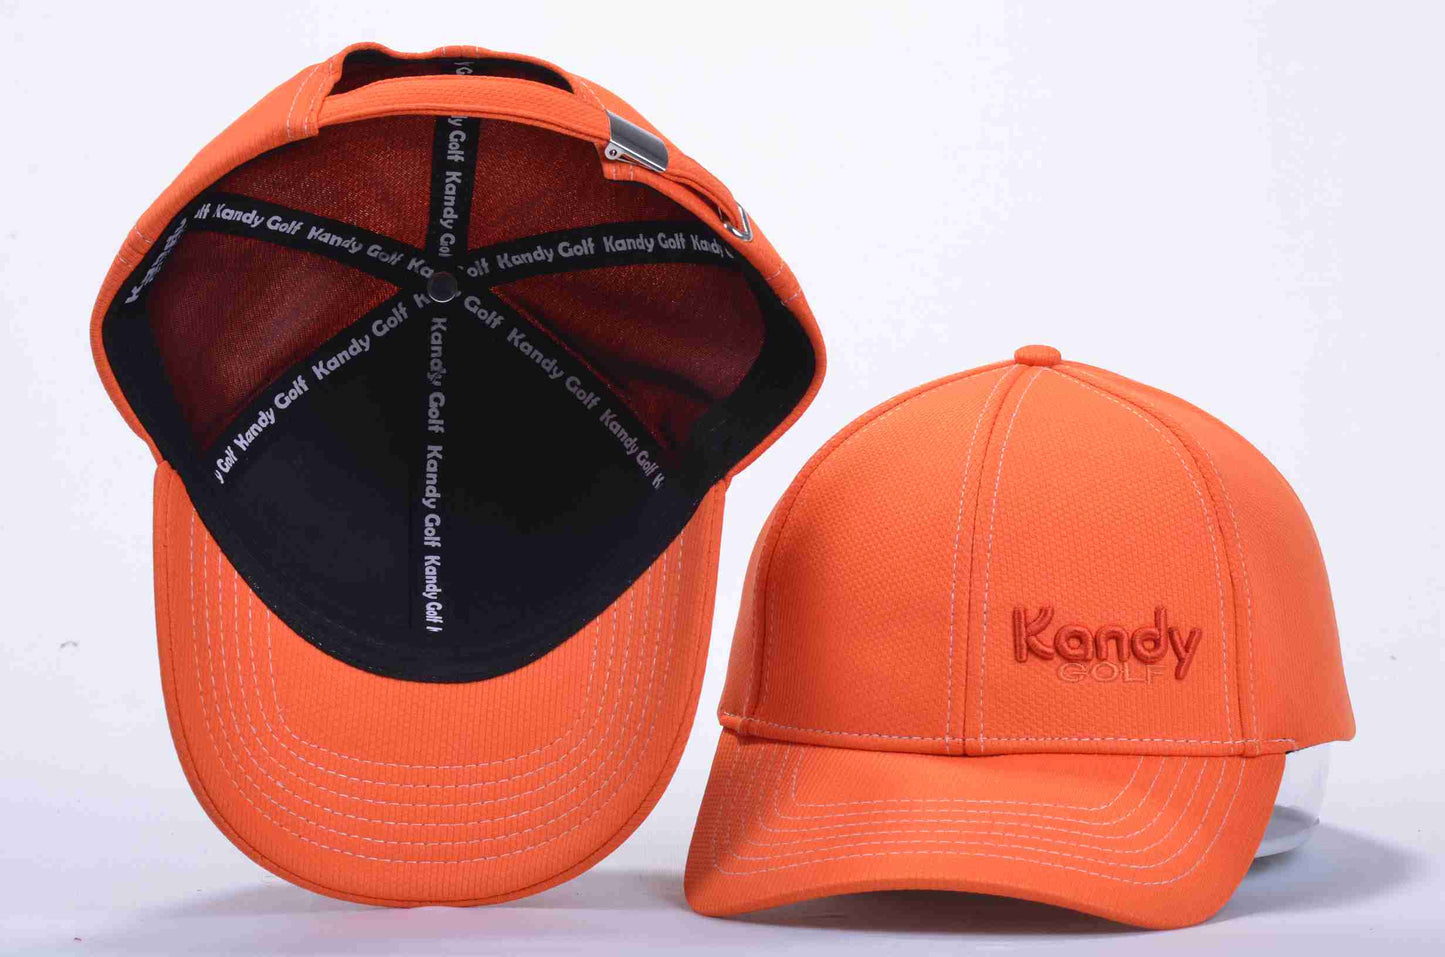 Ladies Classic fit Adjustable Kandy Golf hat